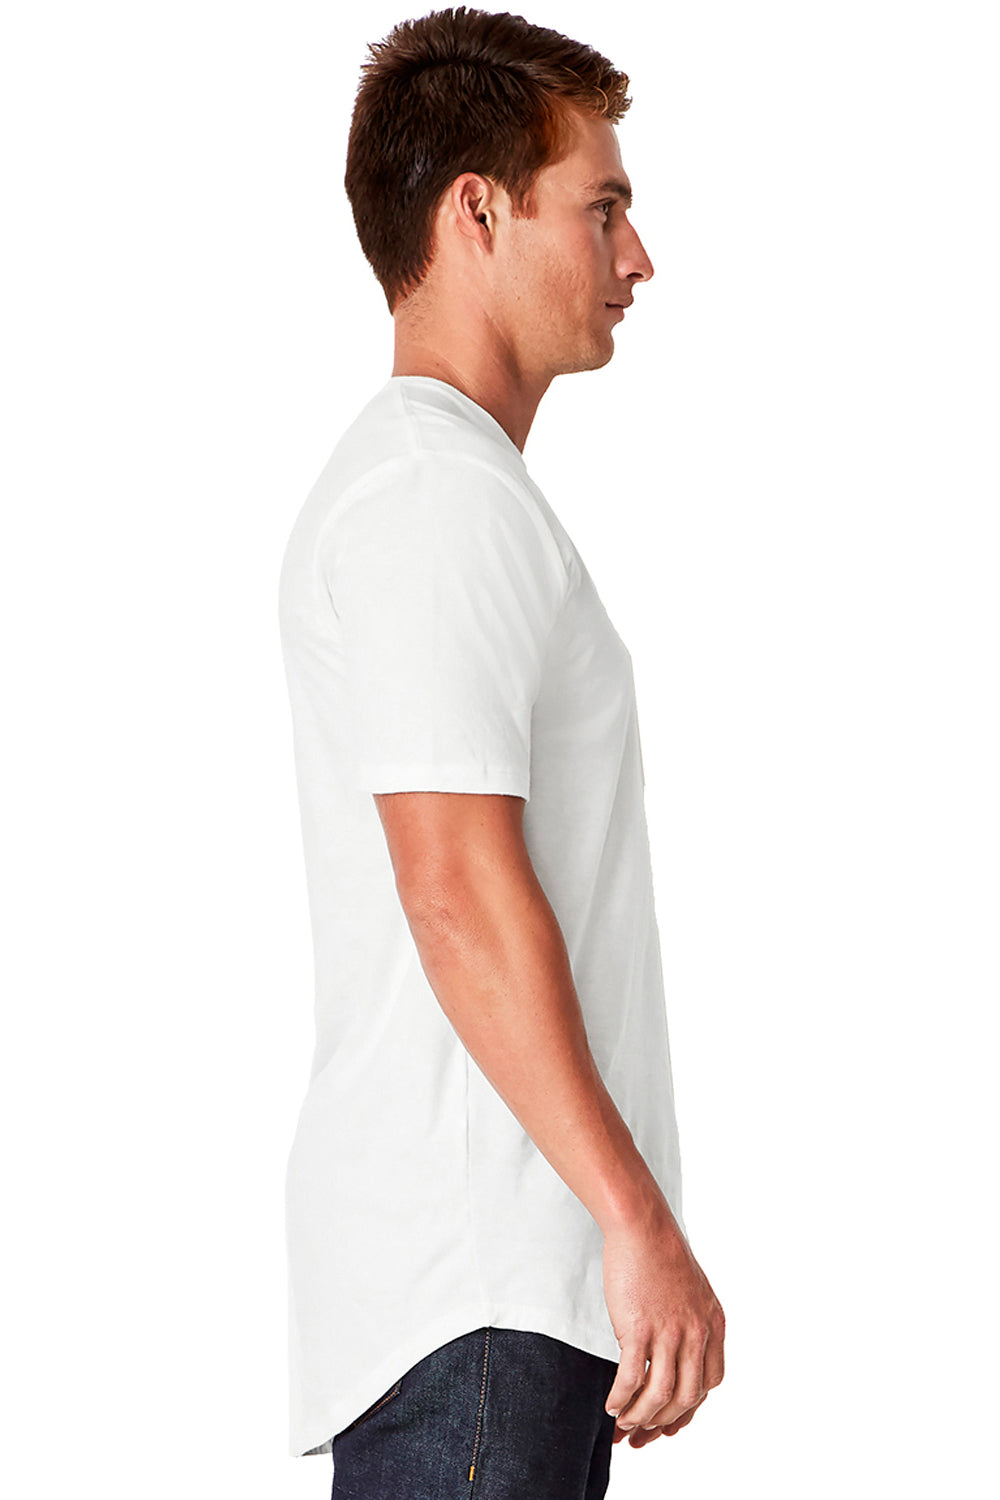 Next Level 3602 Mens Long Body Jersey Short Sleeve Crewneck T-Shirt White Side